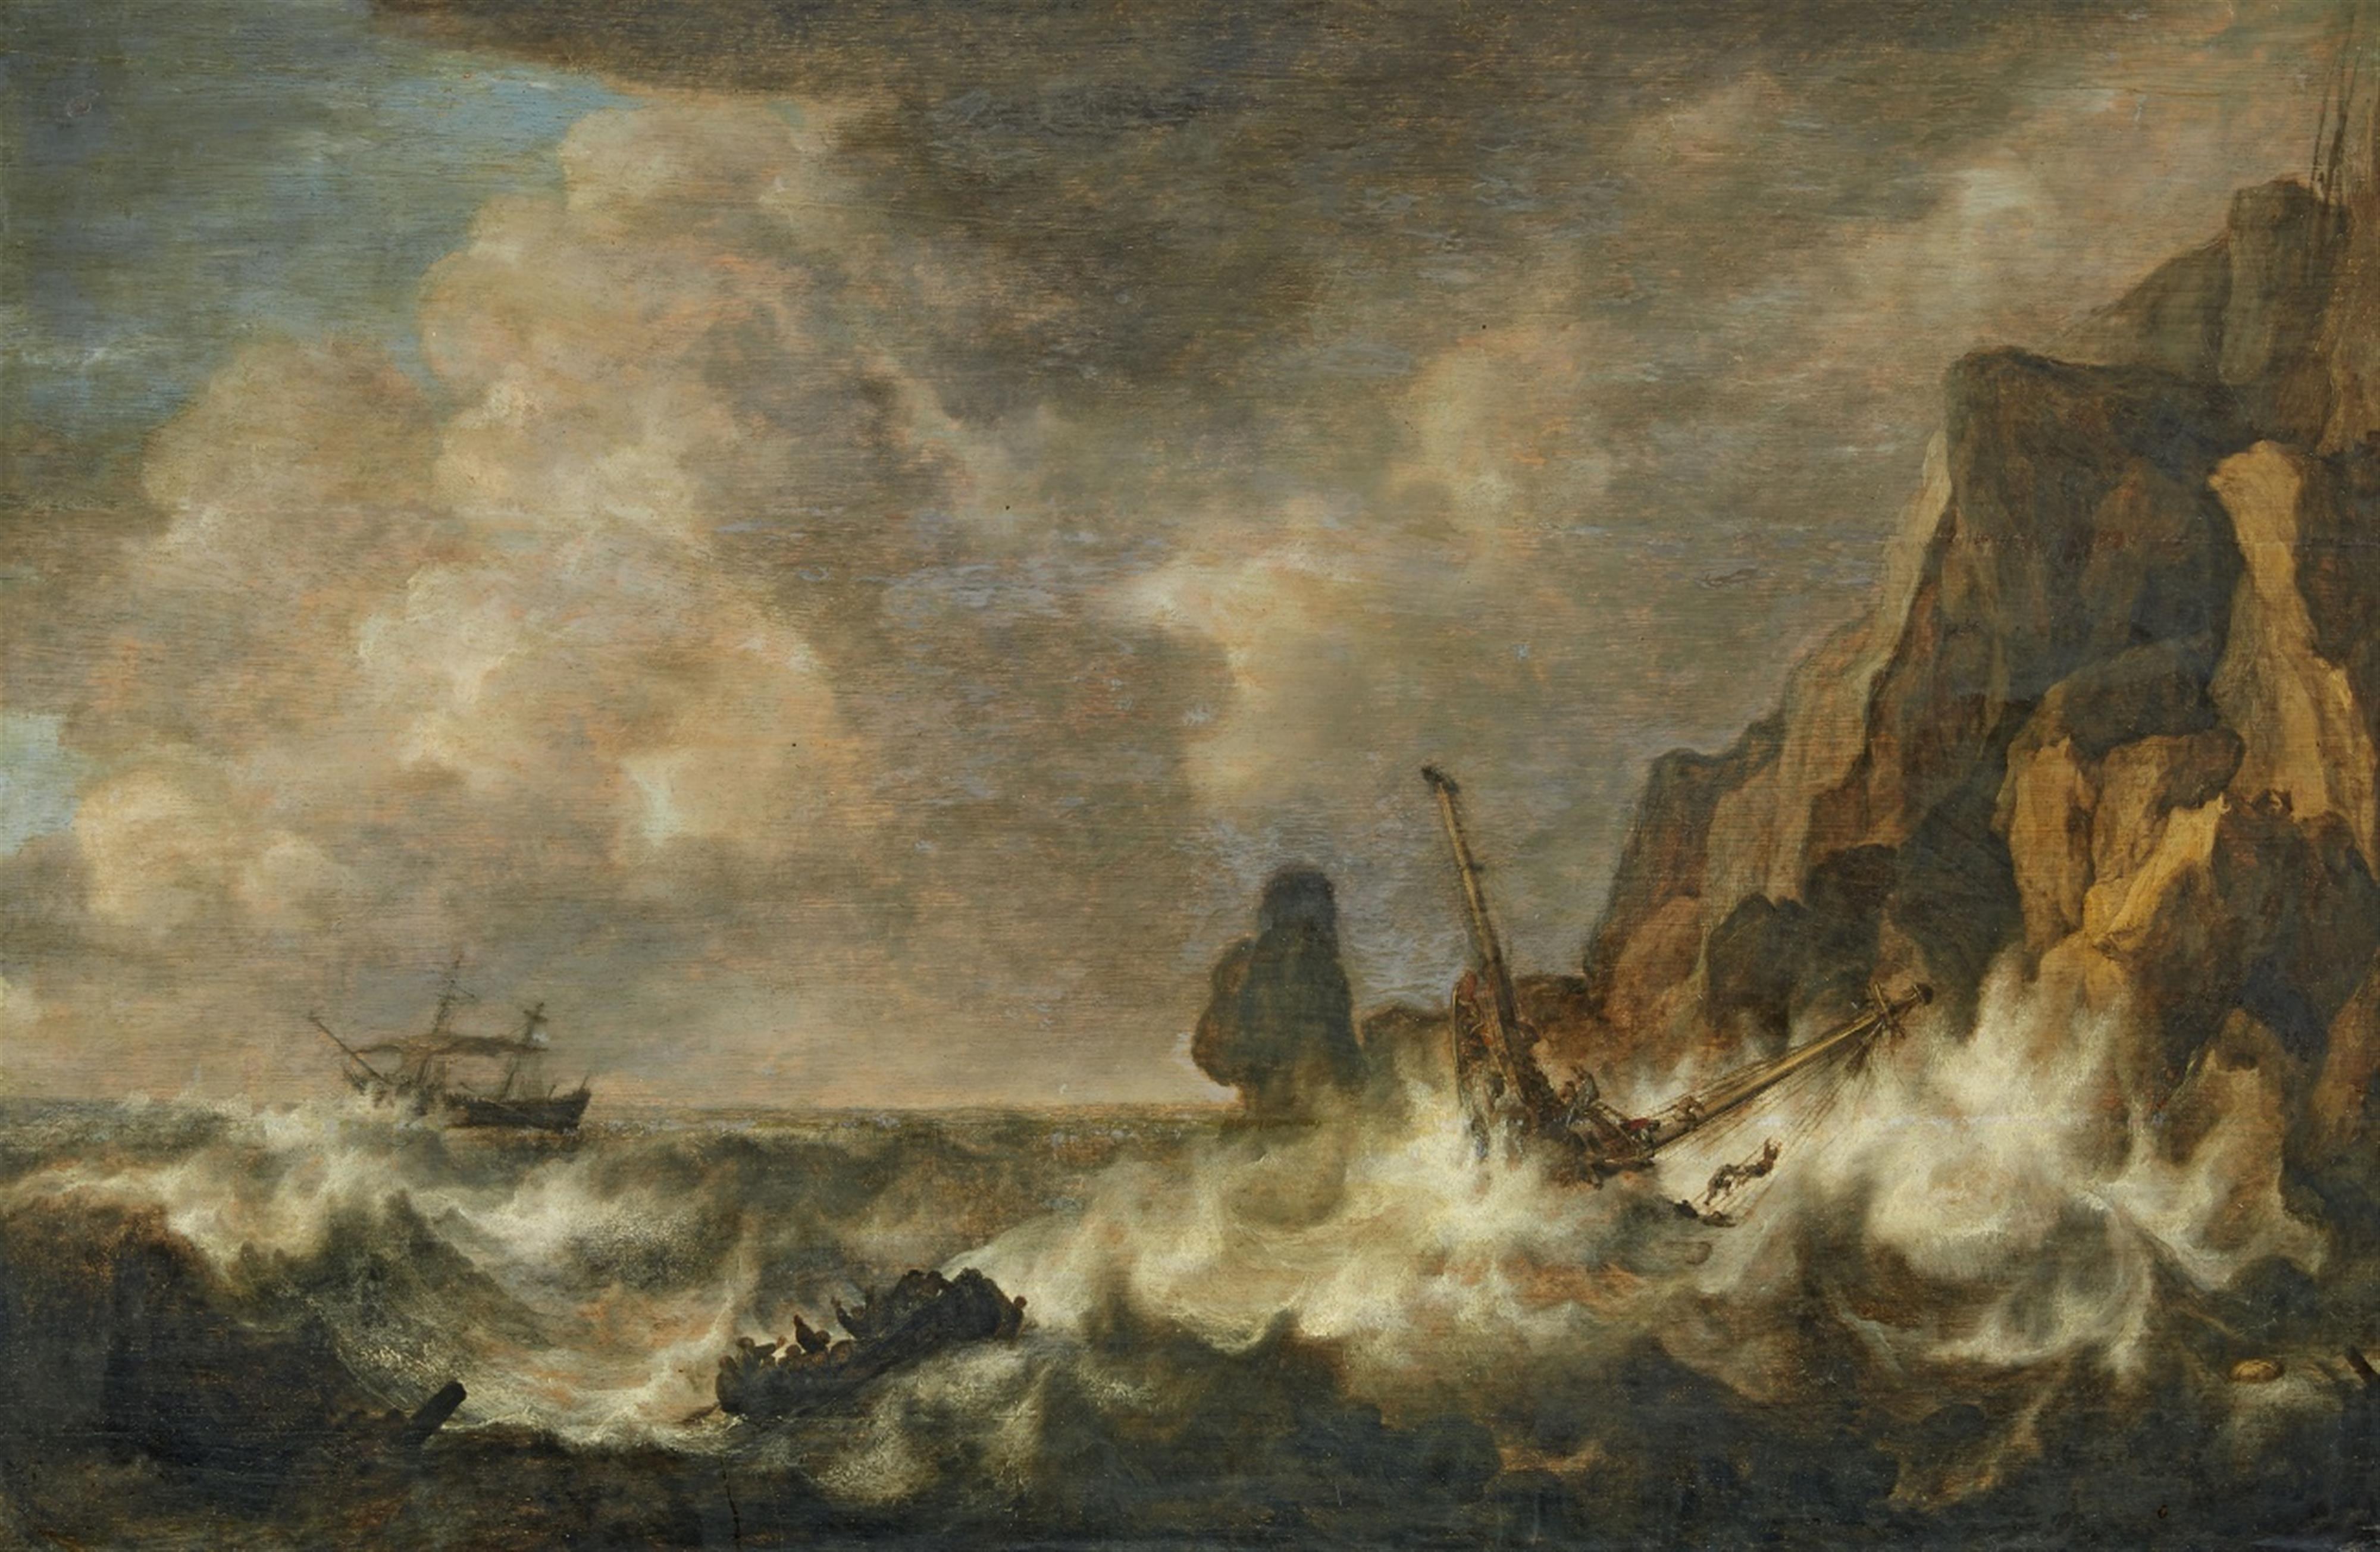 Simon de Vlieger, attributed to - The Shipwreck - image-1